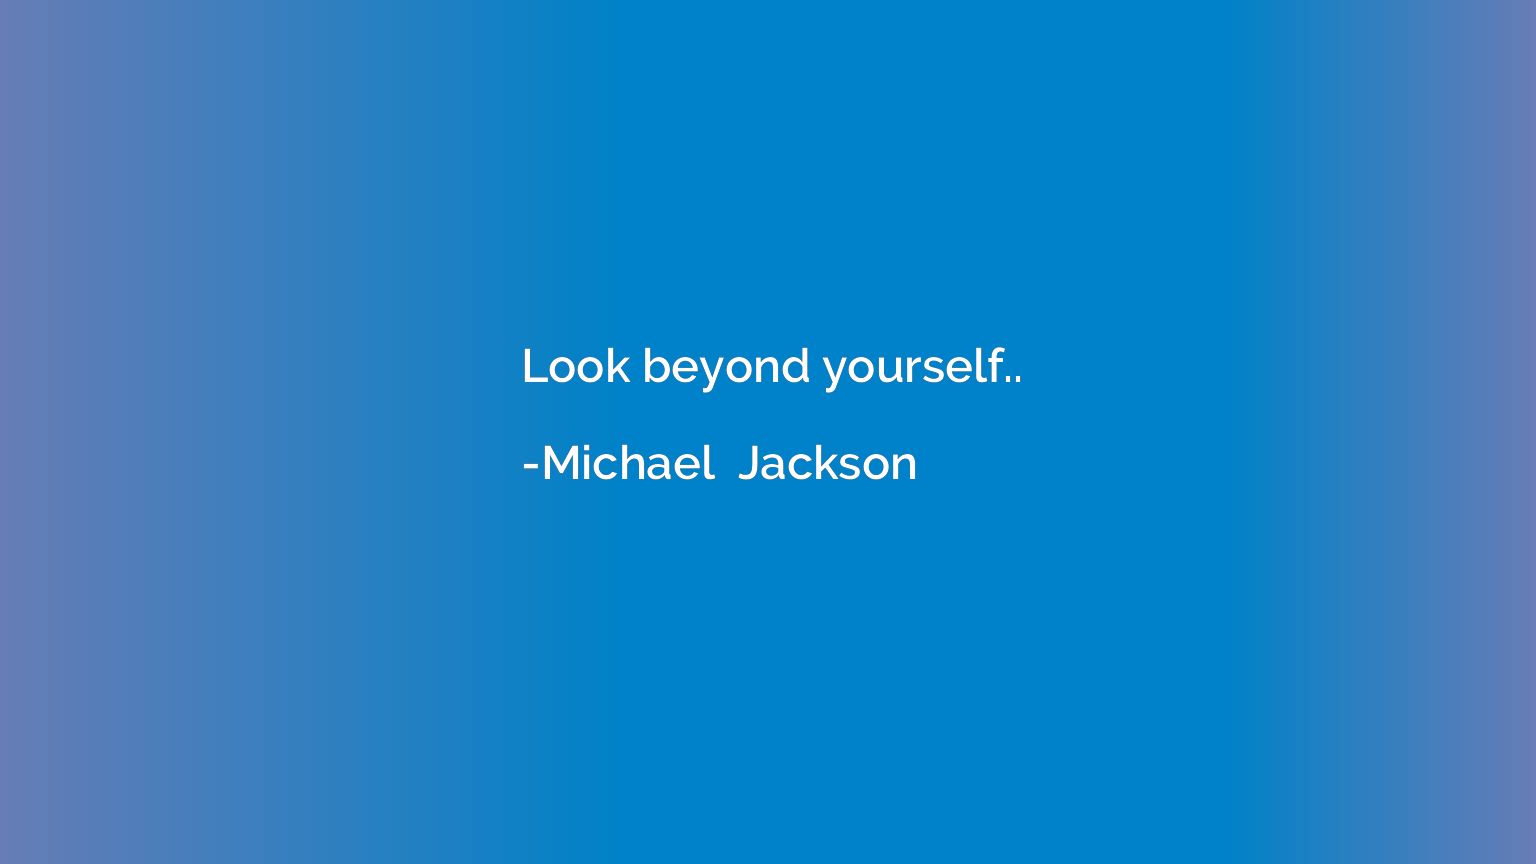 Look beyond yourself..